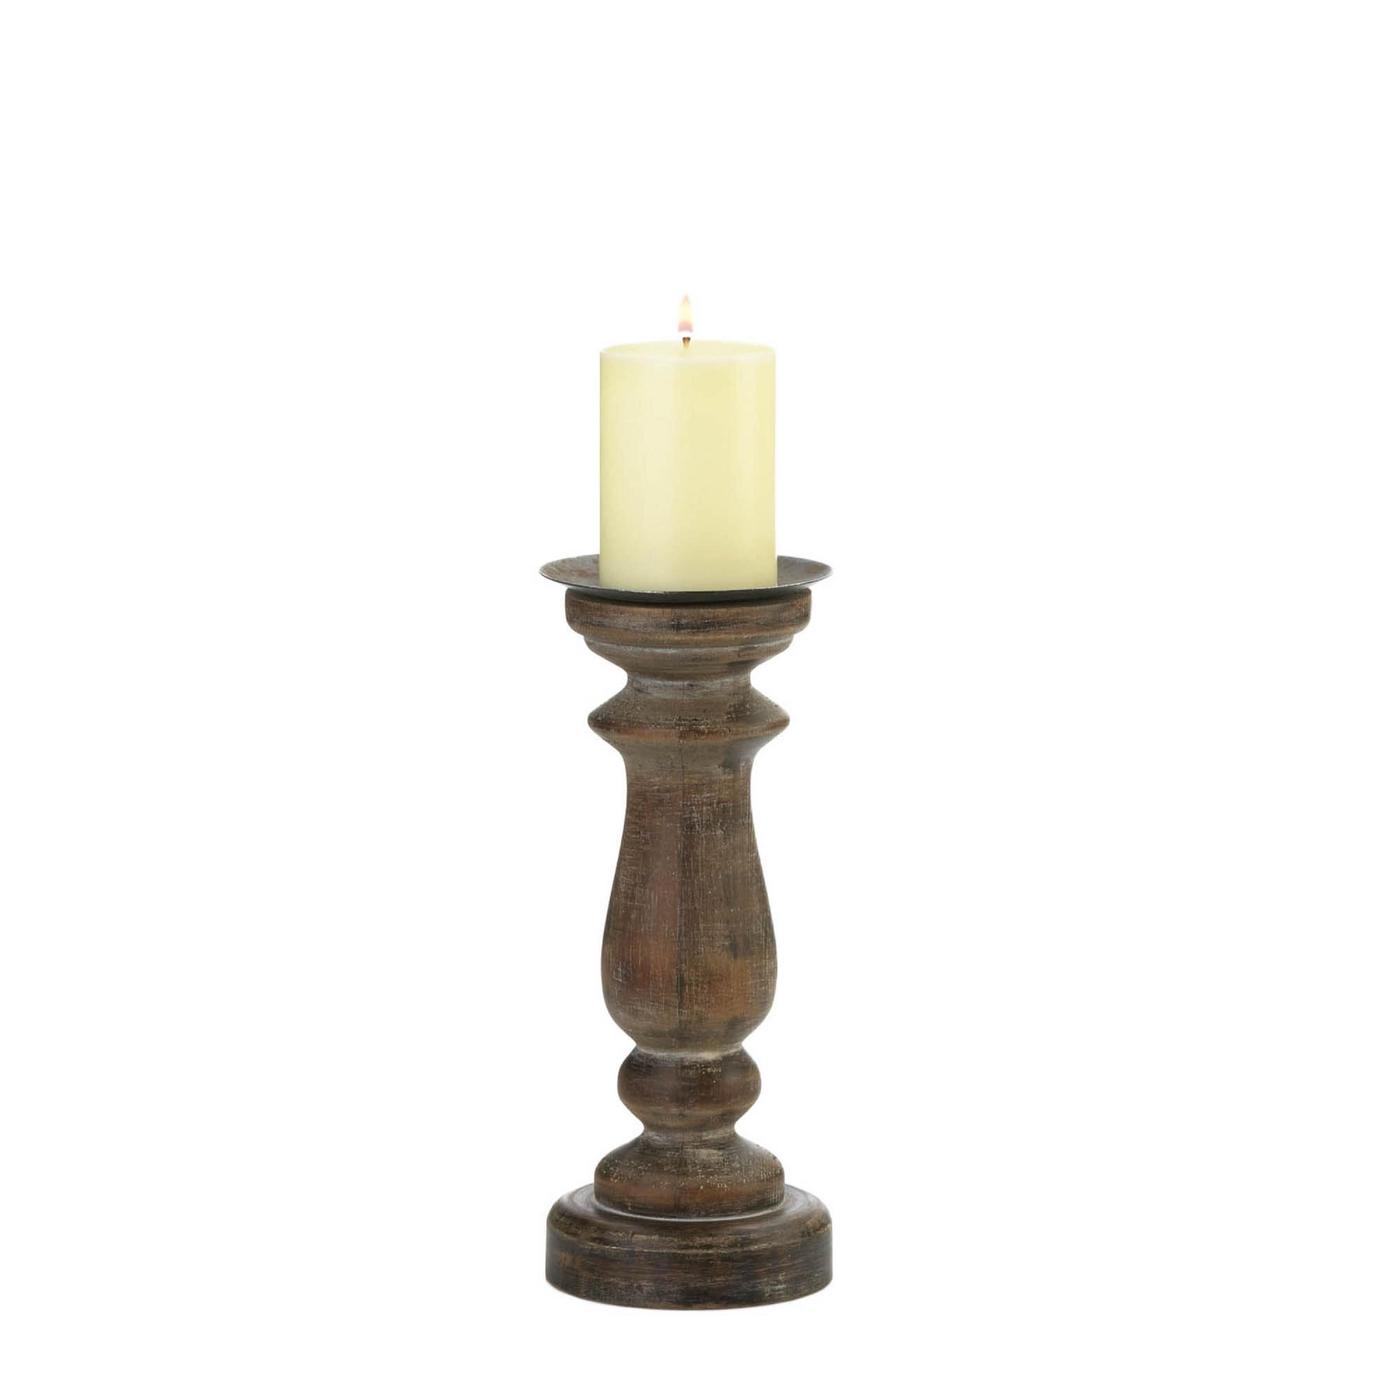 Short Antique-Style Wooden Candleholder